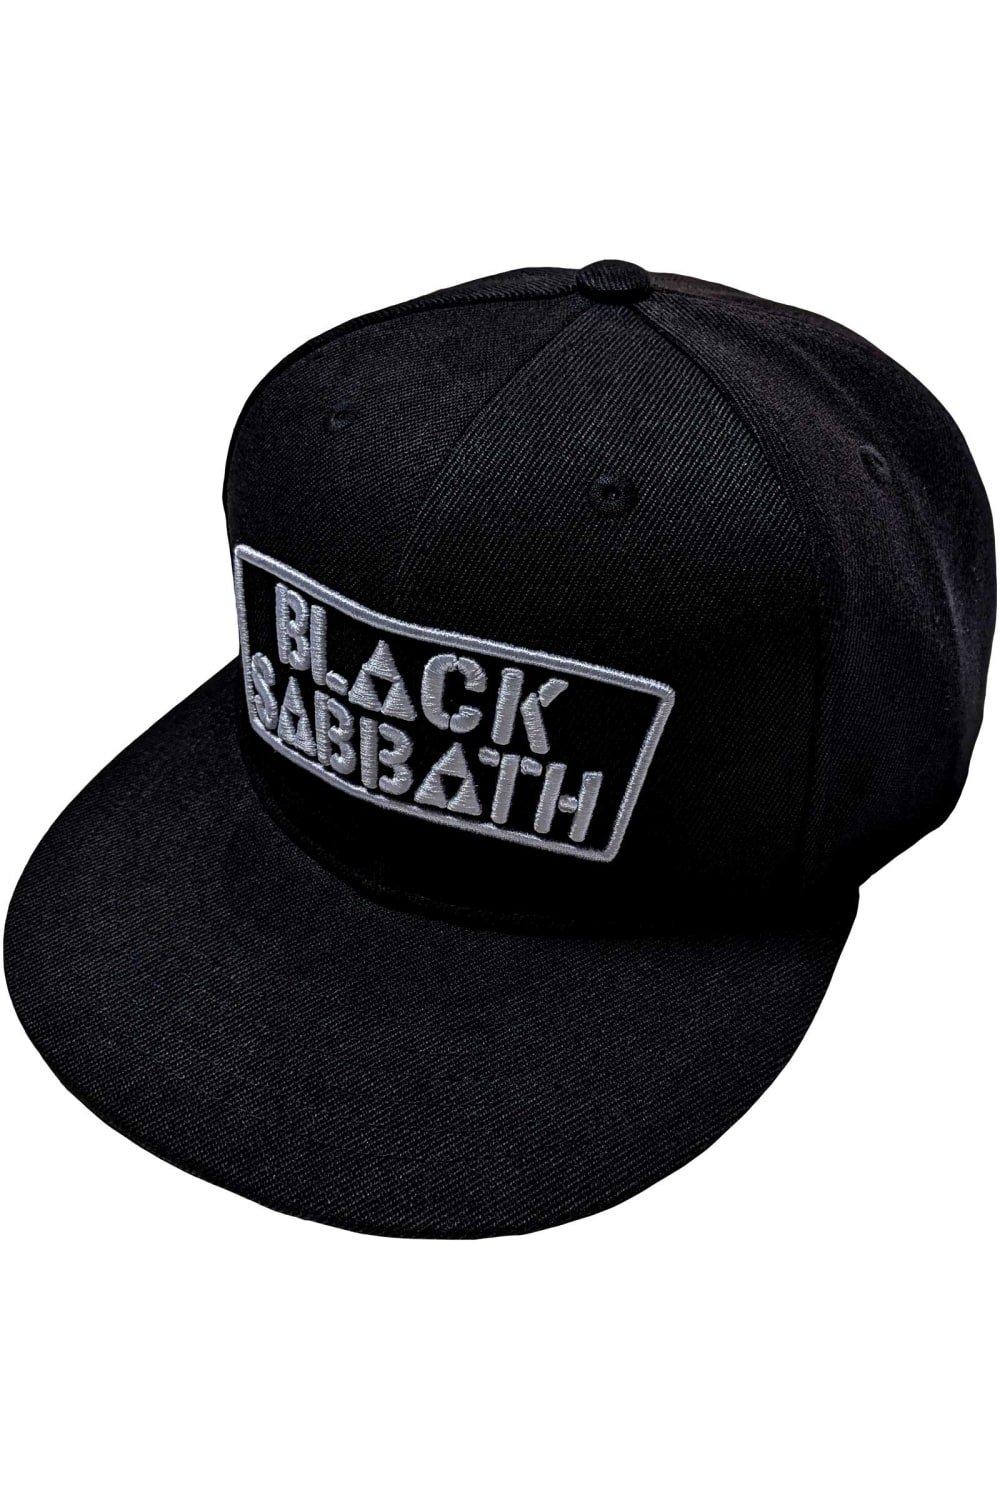 Кепка Snapback Never Say Die Black Sabbath, черный